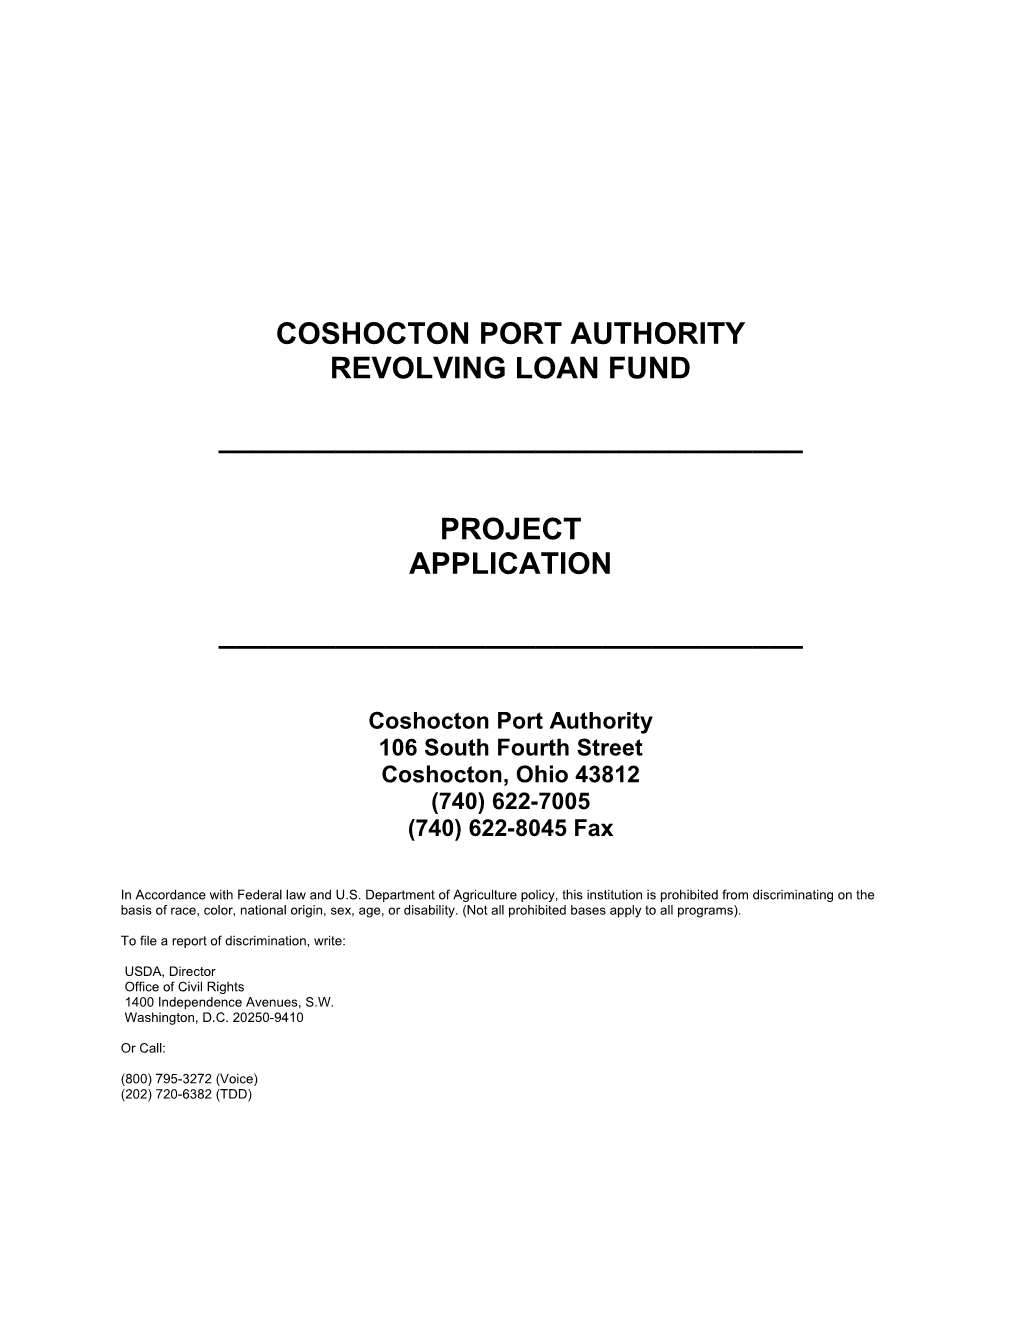 Coshoction Port Authoiryt